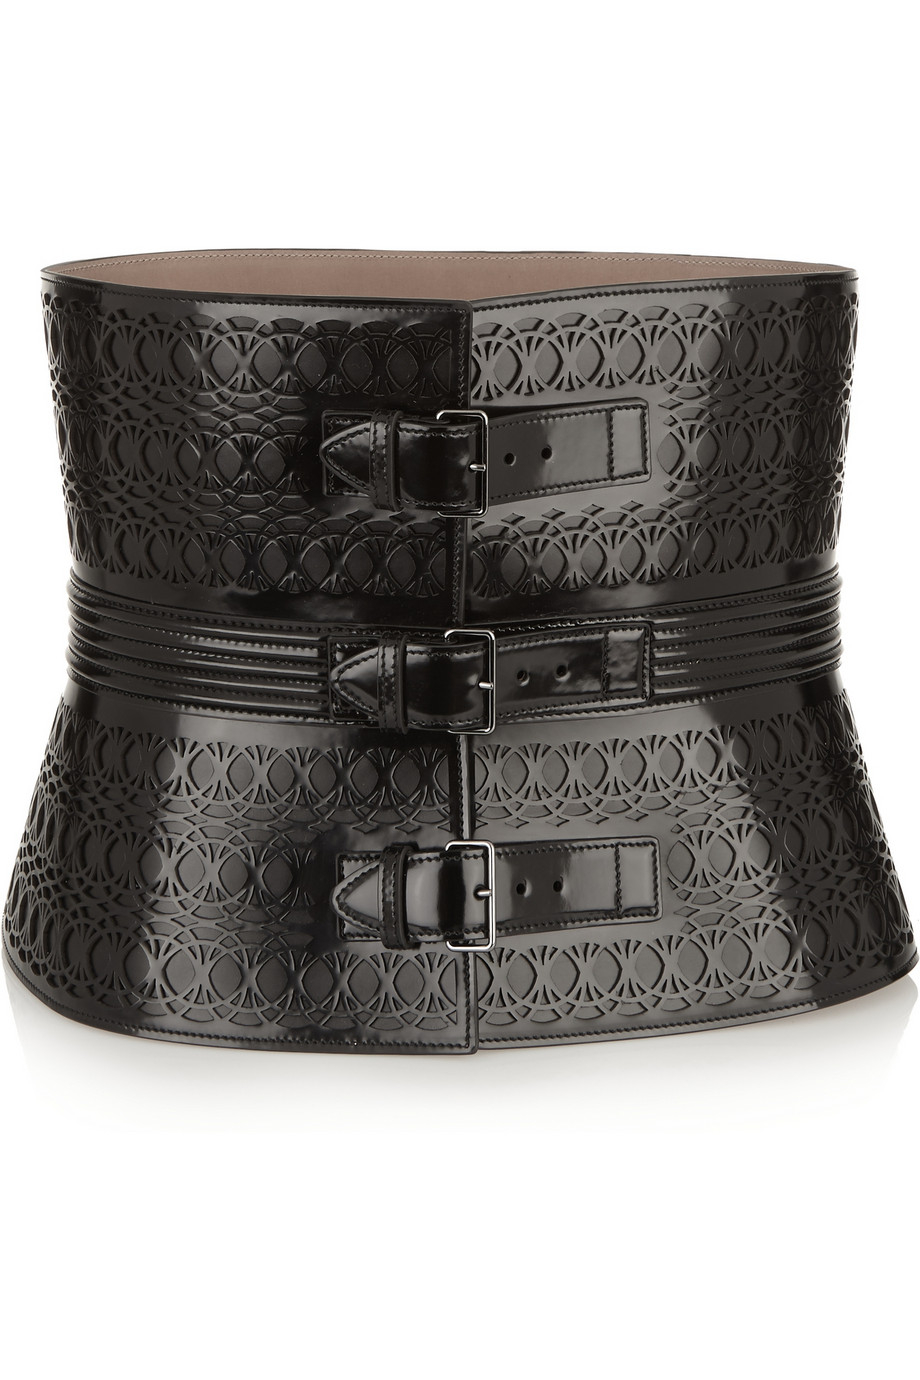 Lyst - Alaïa Laser-cut Glossed-leather Waist Belt in Black